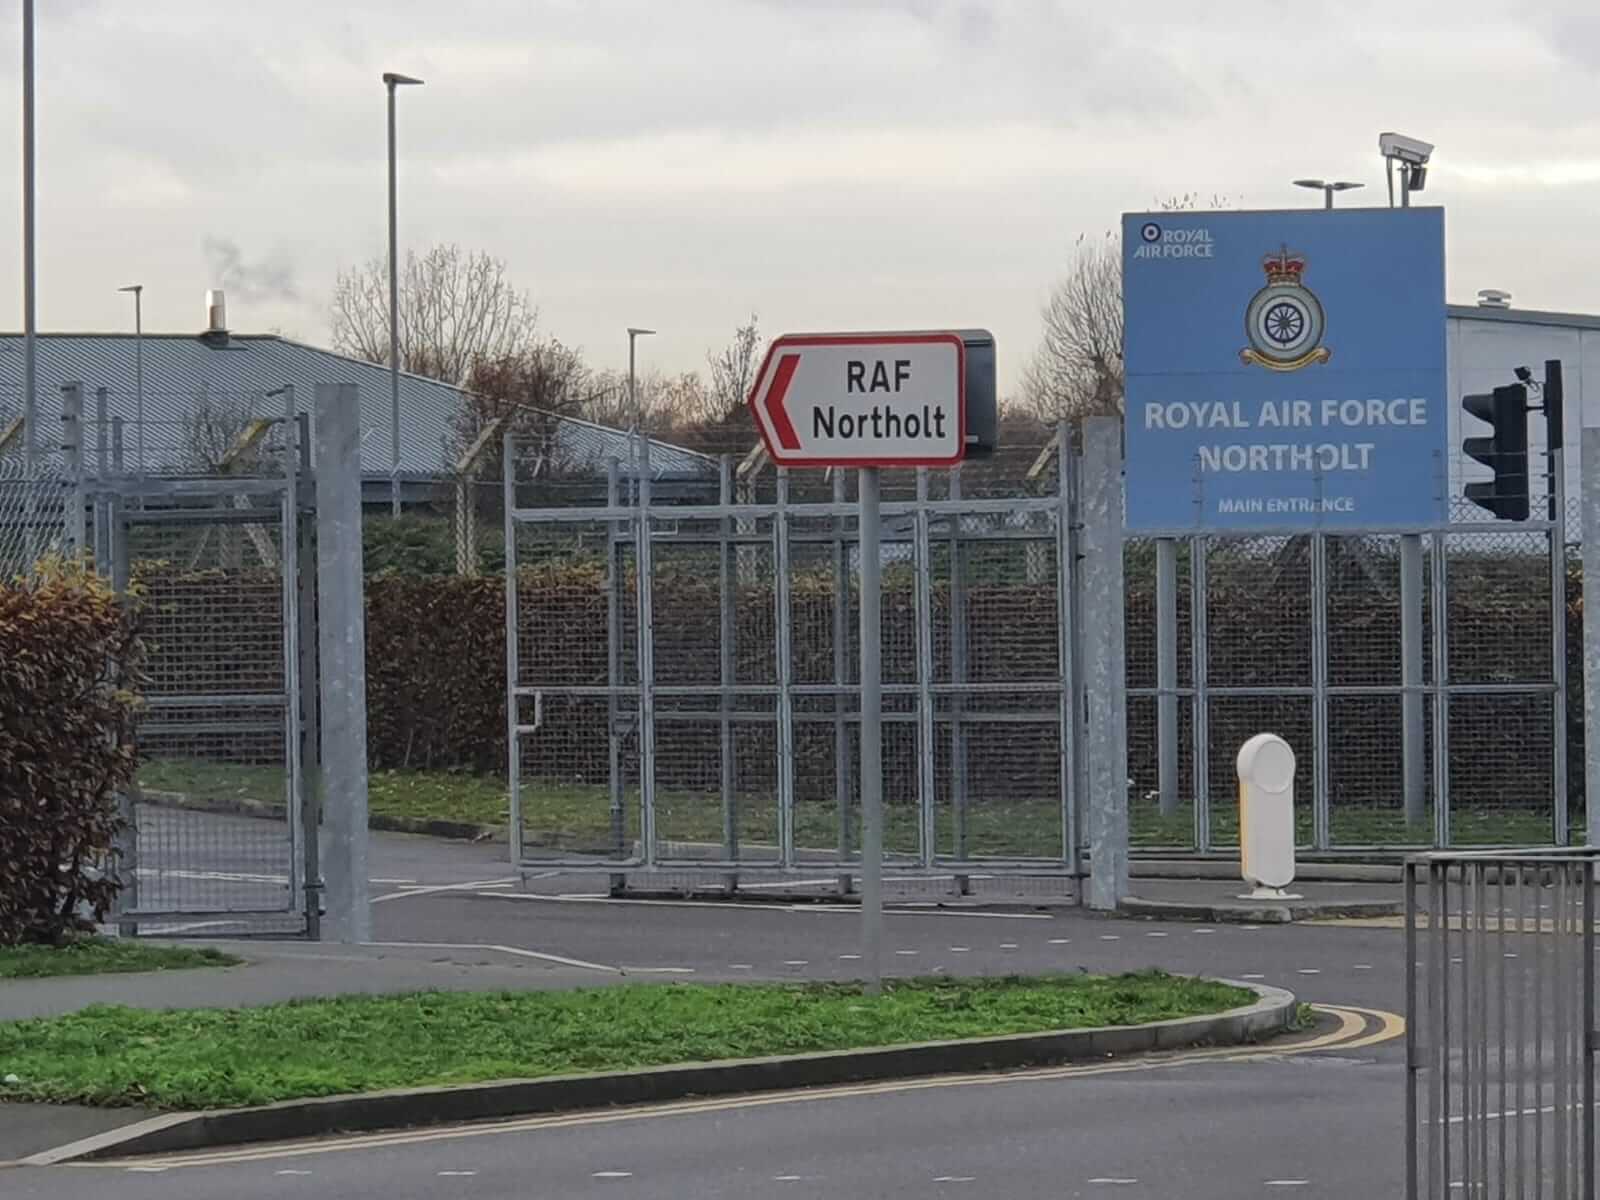 RAF Northolt Airport